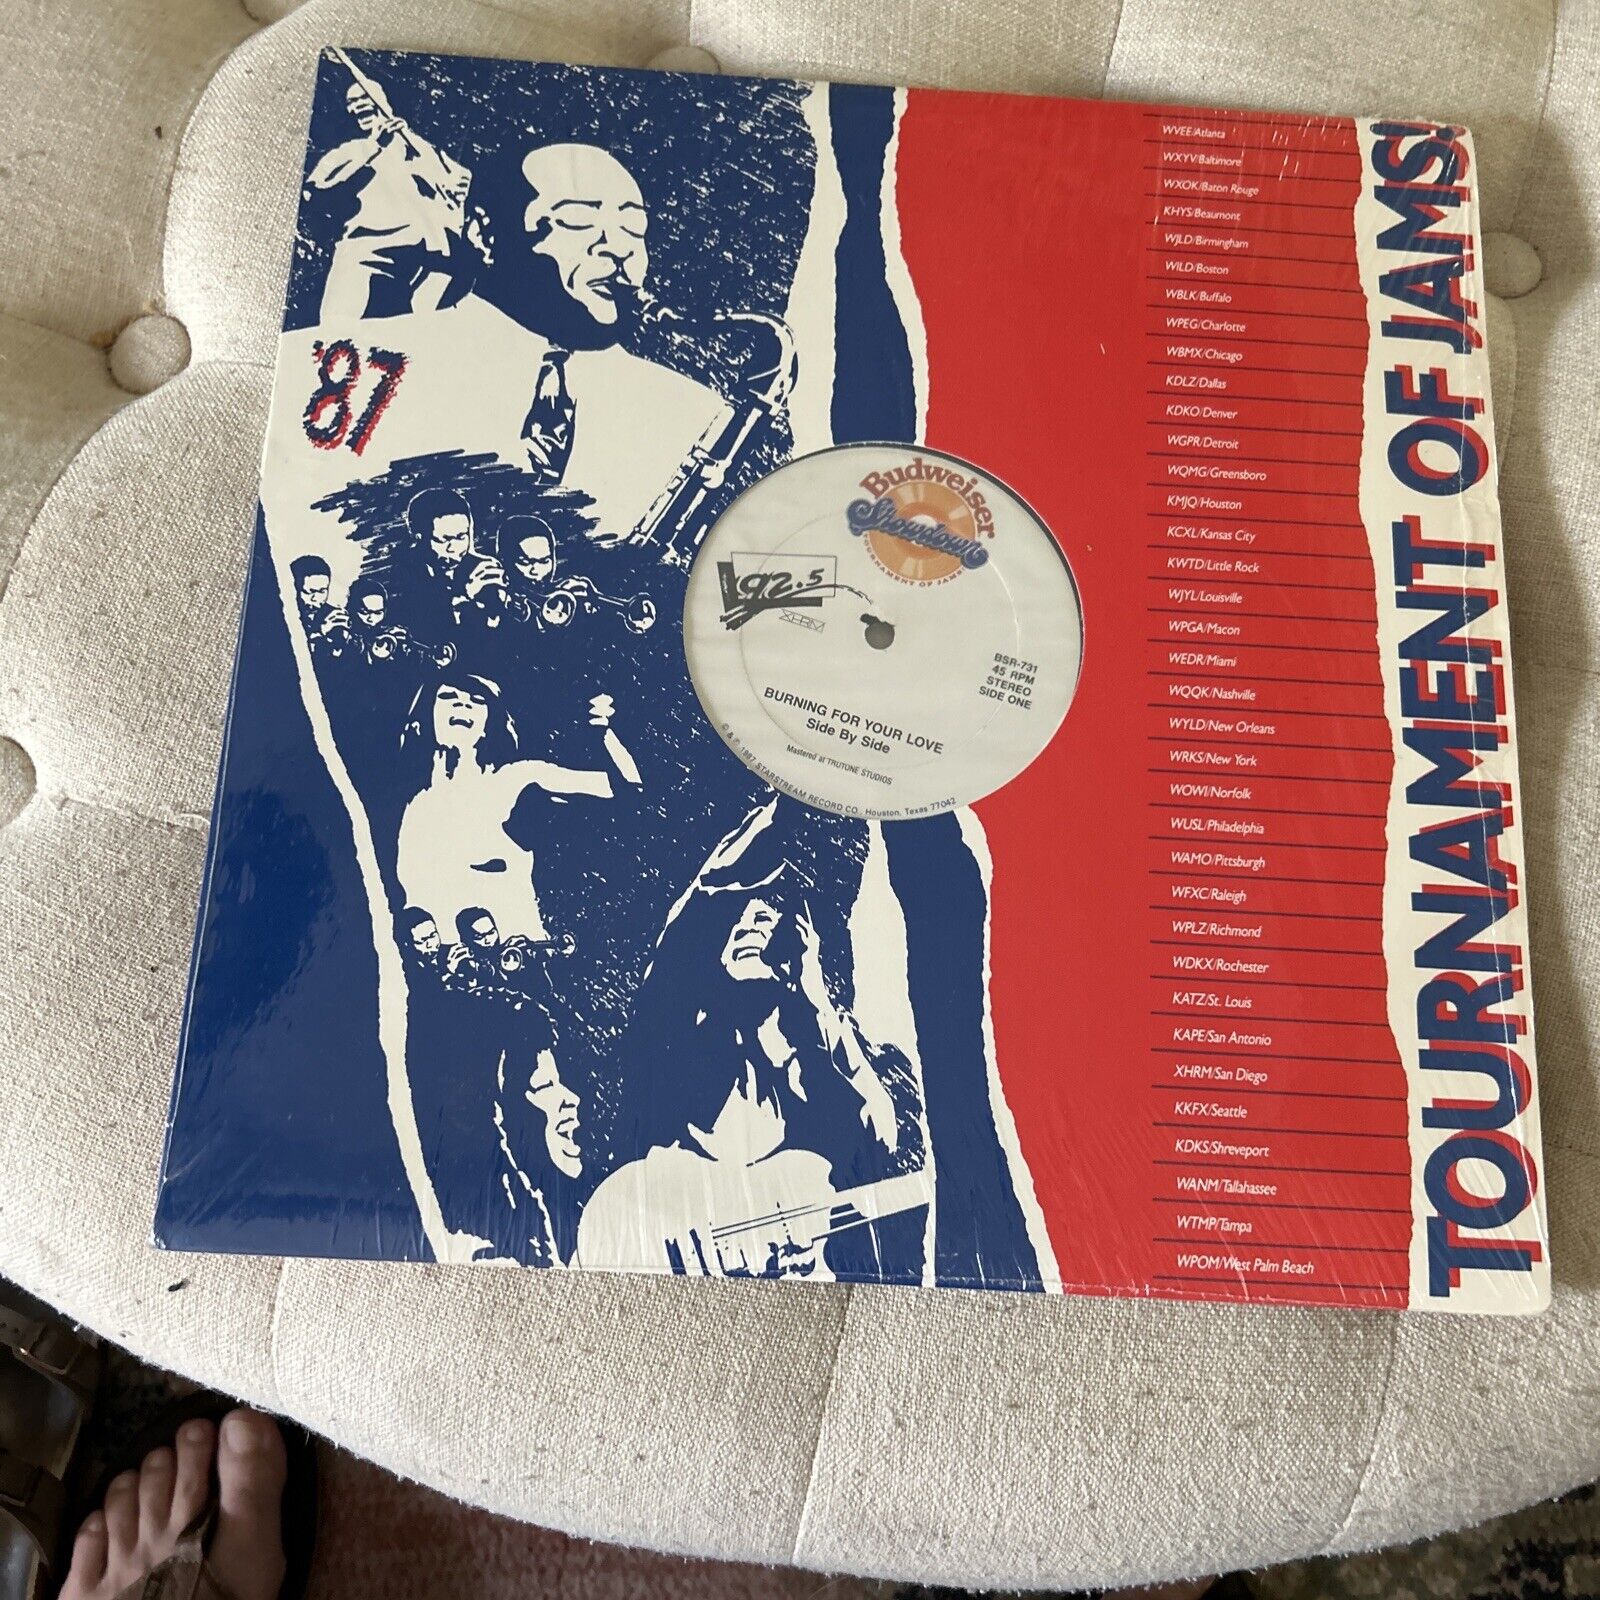 Budweiser Showdown Tournament Of Jams BSR-731 Vinyl Record 1987 92.5 XHRM Rare